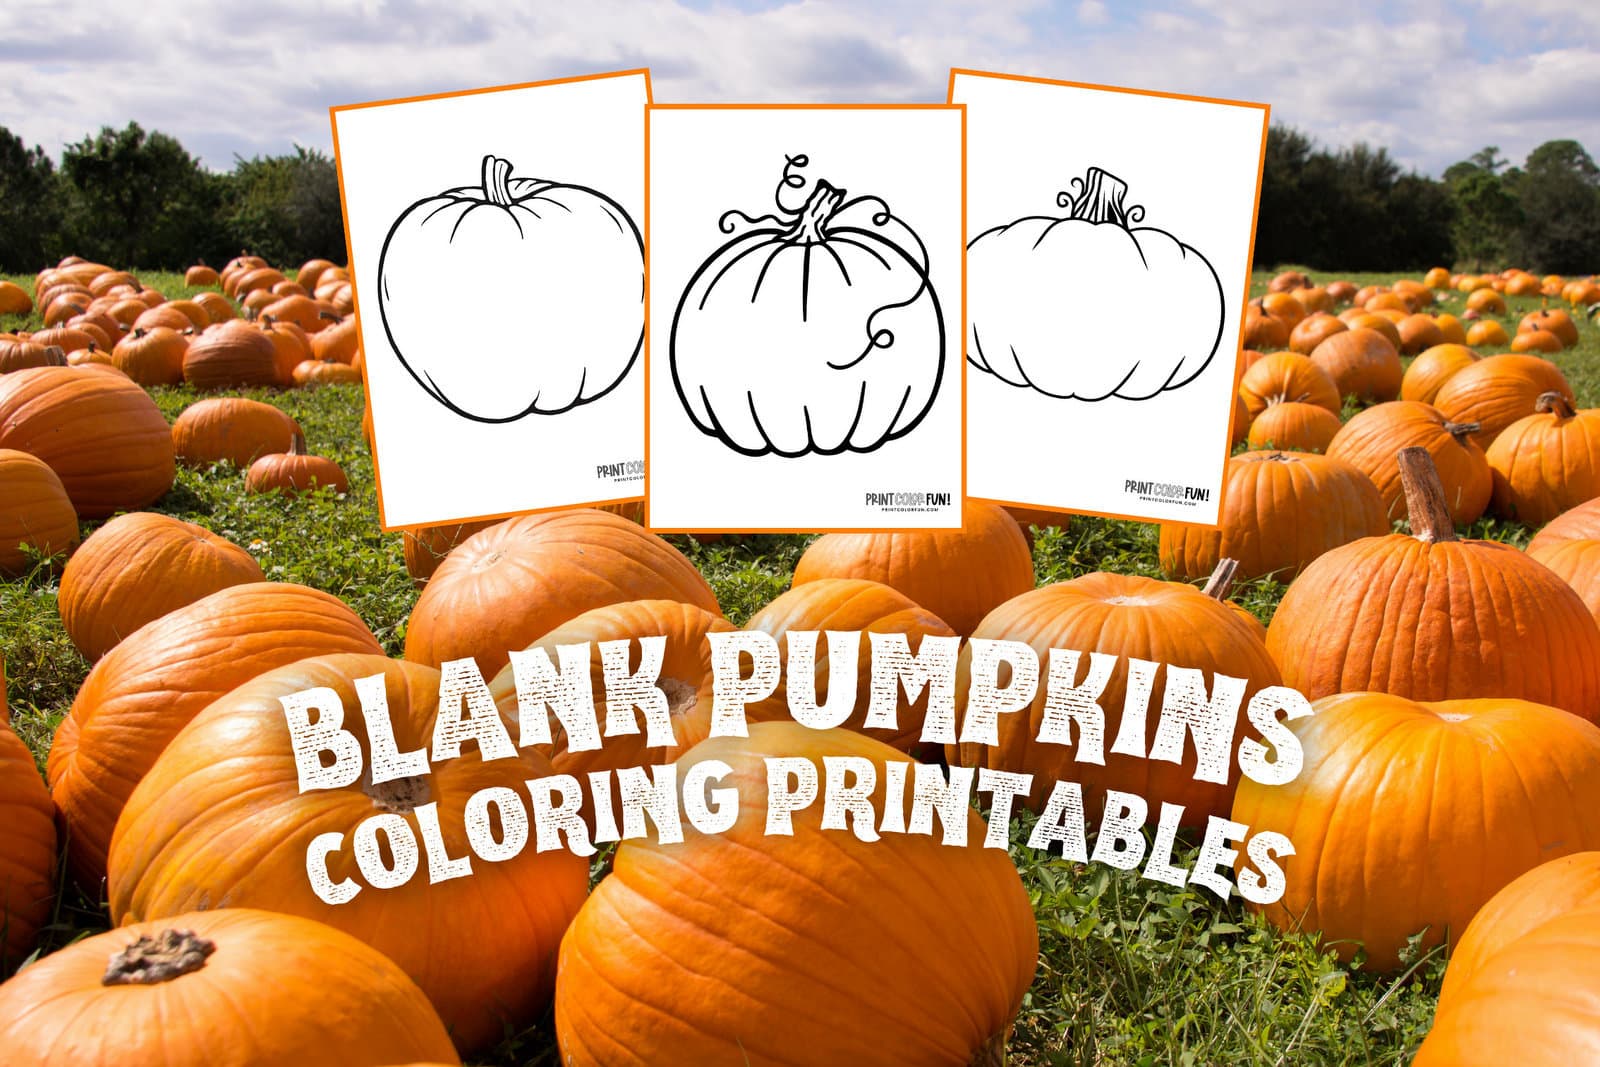 Pumpkin outline printables large blank pumpkin templates for autumn fun at